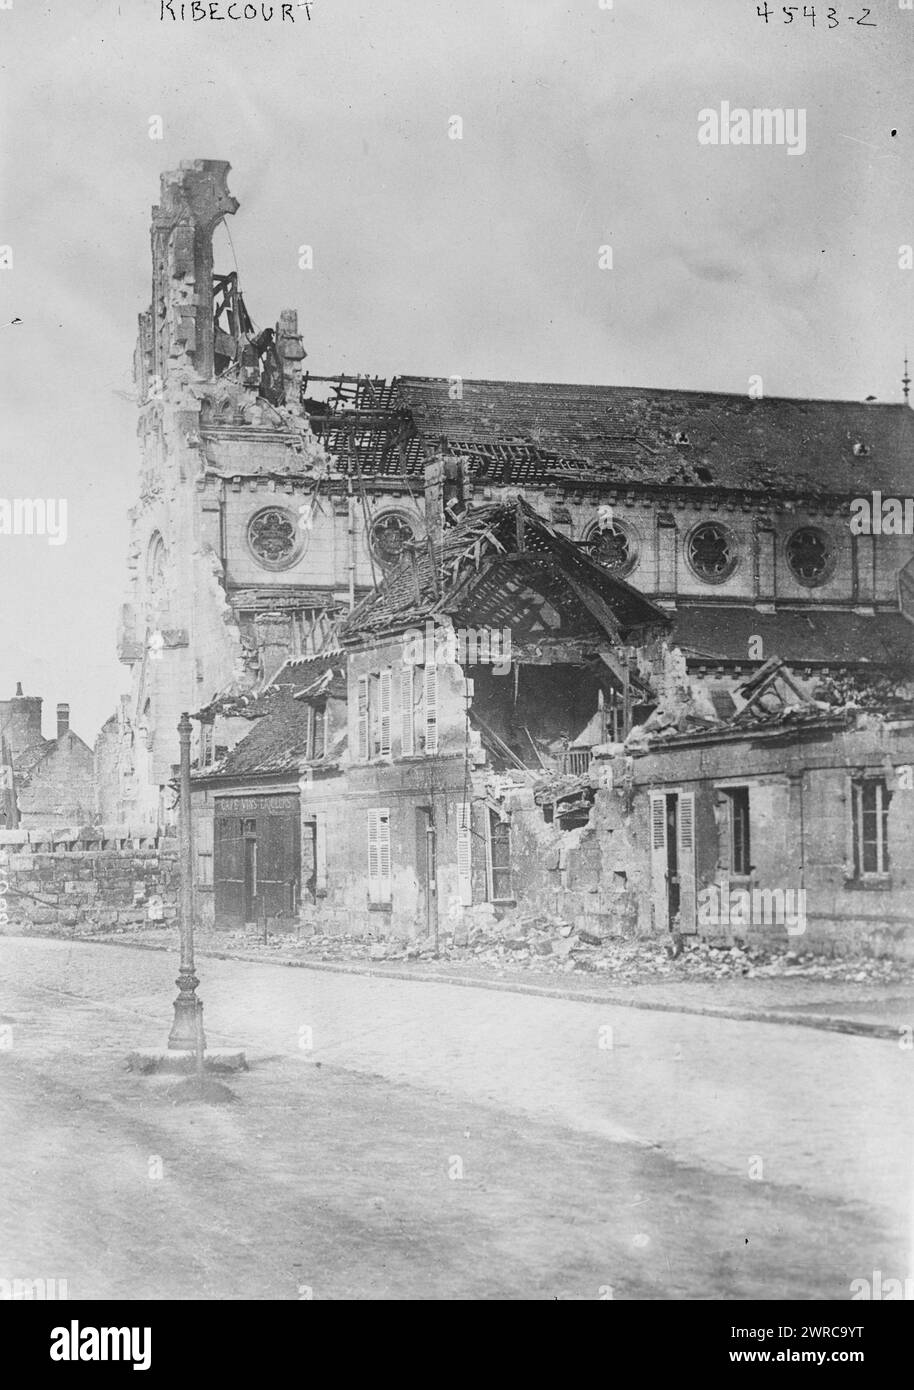 Ribecourt, Photograph shows the Saint Rémi church, Ribécourt, France which was damaged during World War I., 1915, World War, 1914-1918, Glass negatives, 1 negative: glass Stock Photo